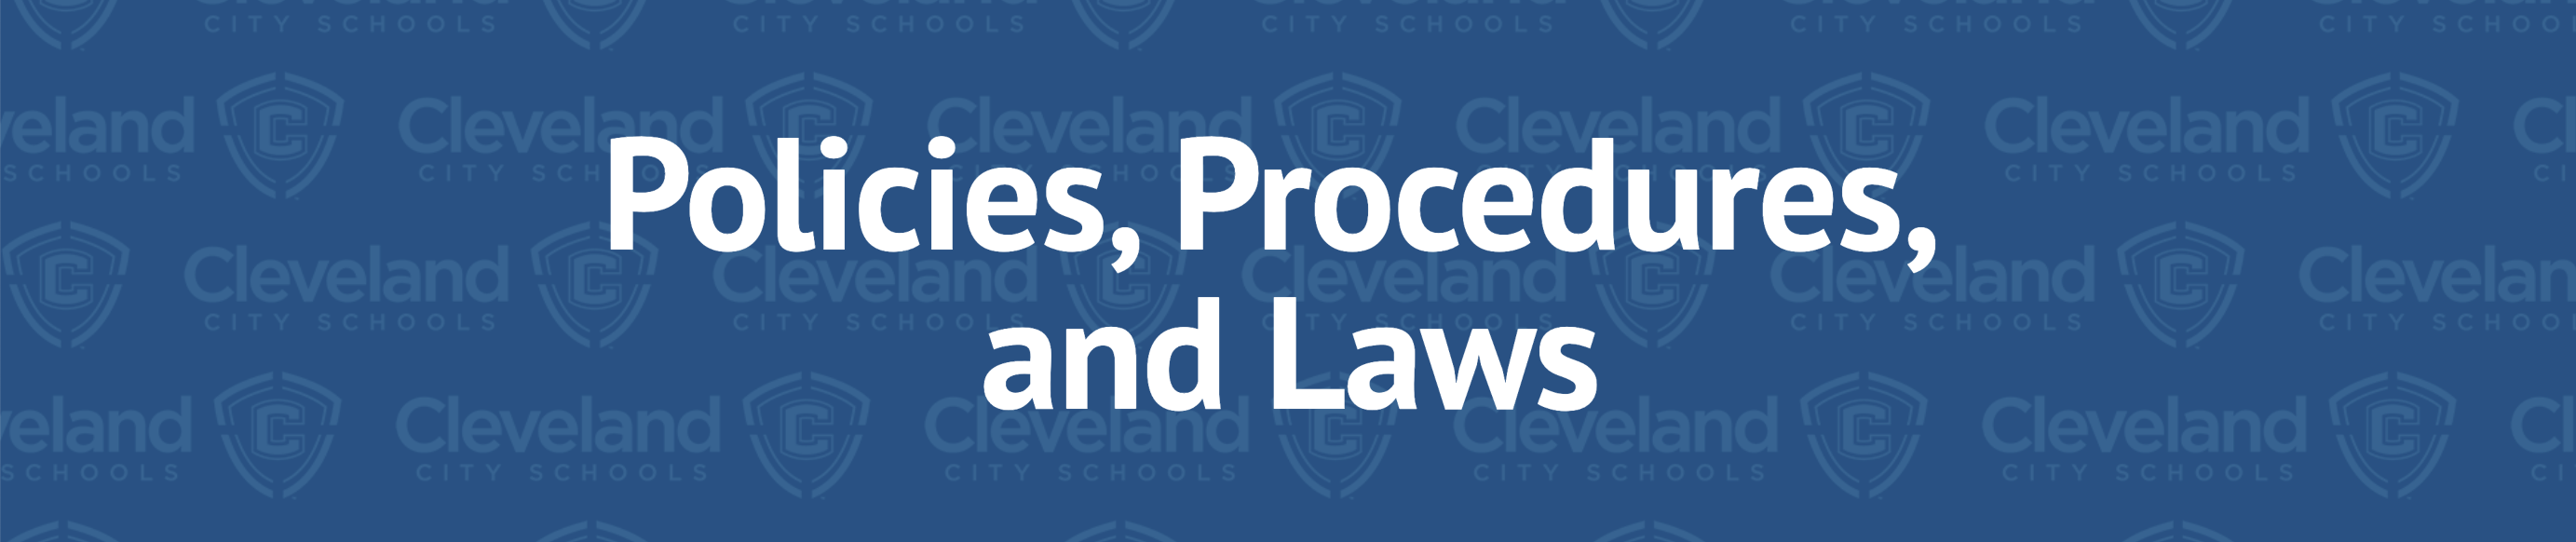 Policies, Procedures, and Laws